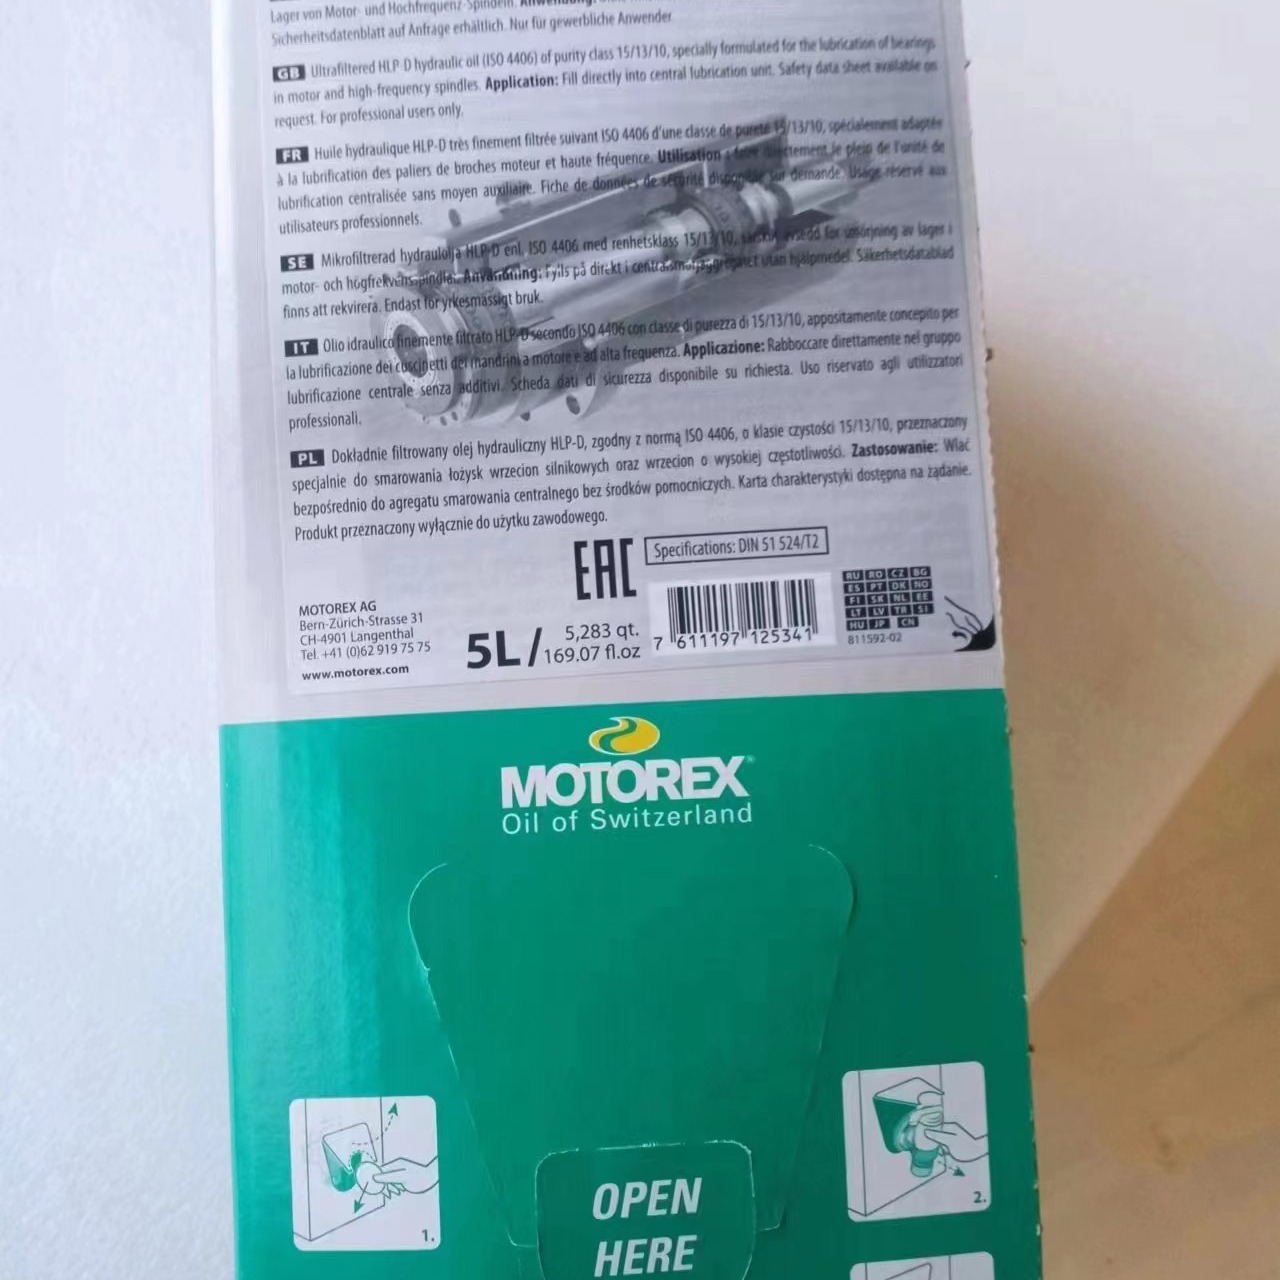 MOTOREX SPINDLE LUBE ISO VG68主轴润滑油, 现货